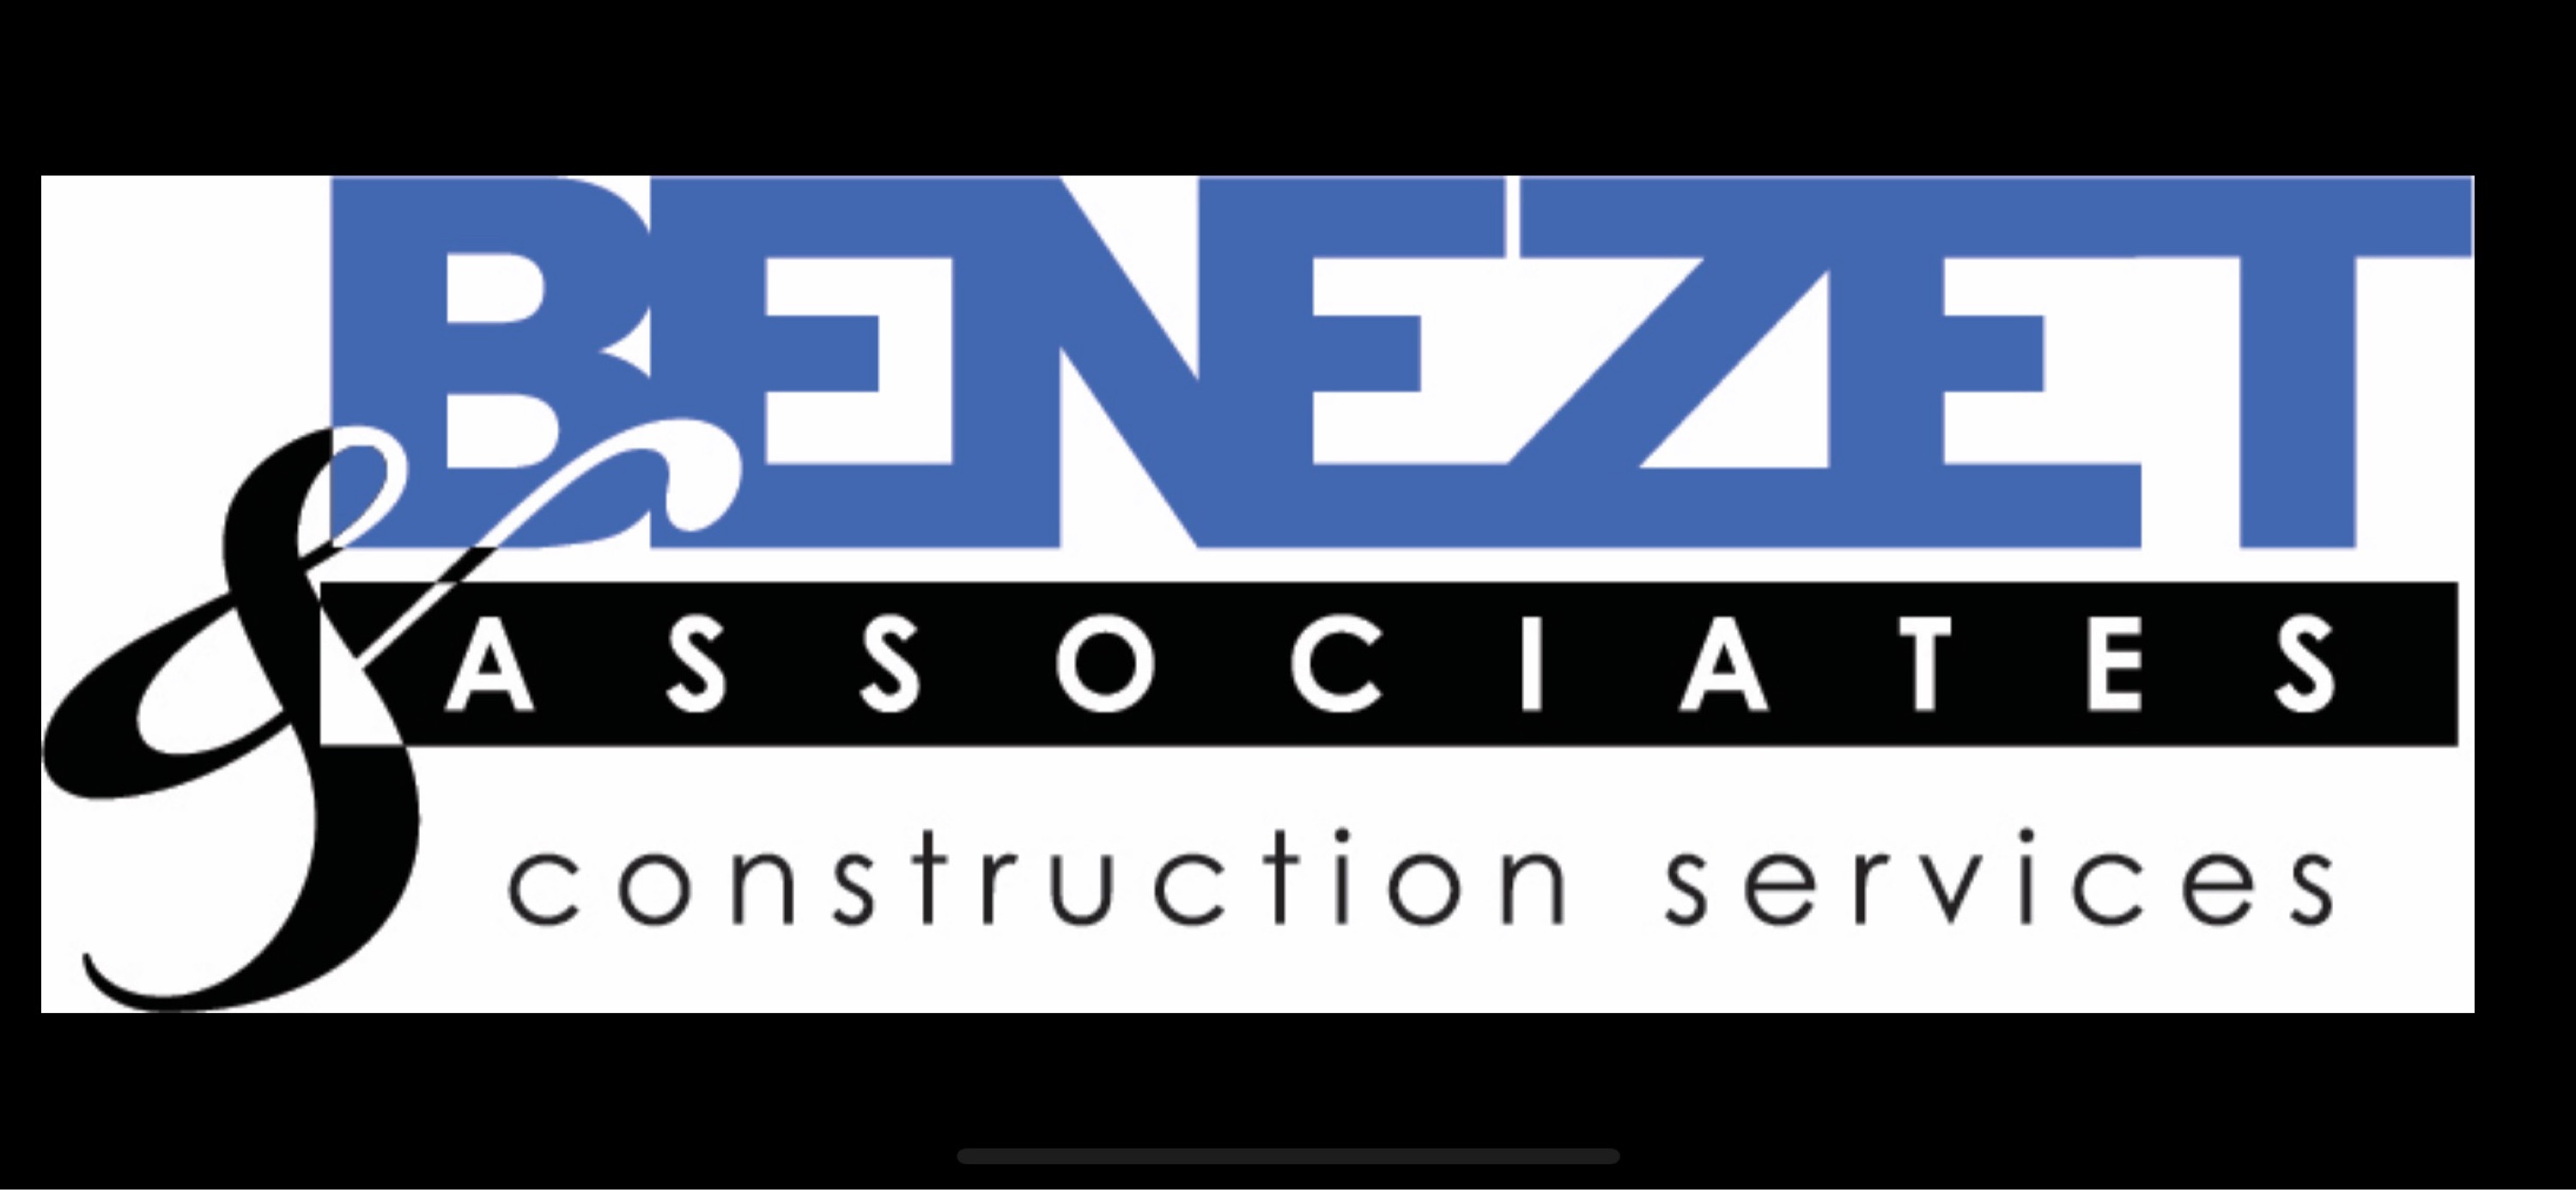 Benezet and Associates Construction Services Logo